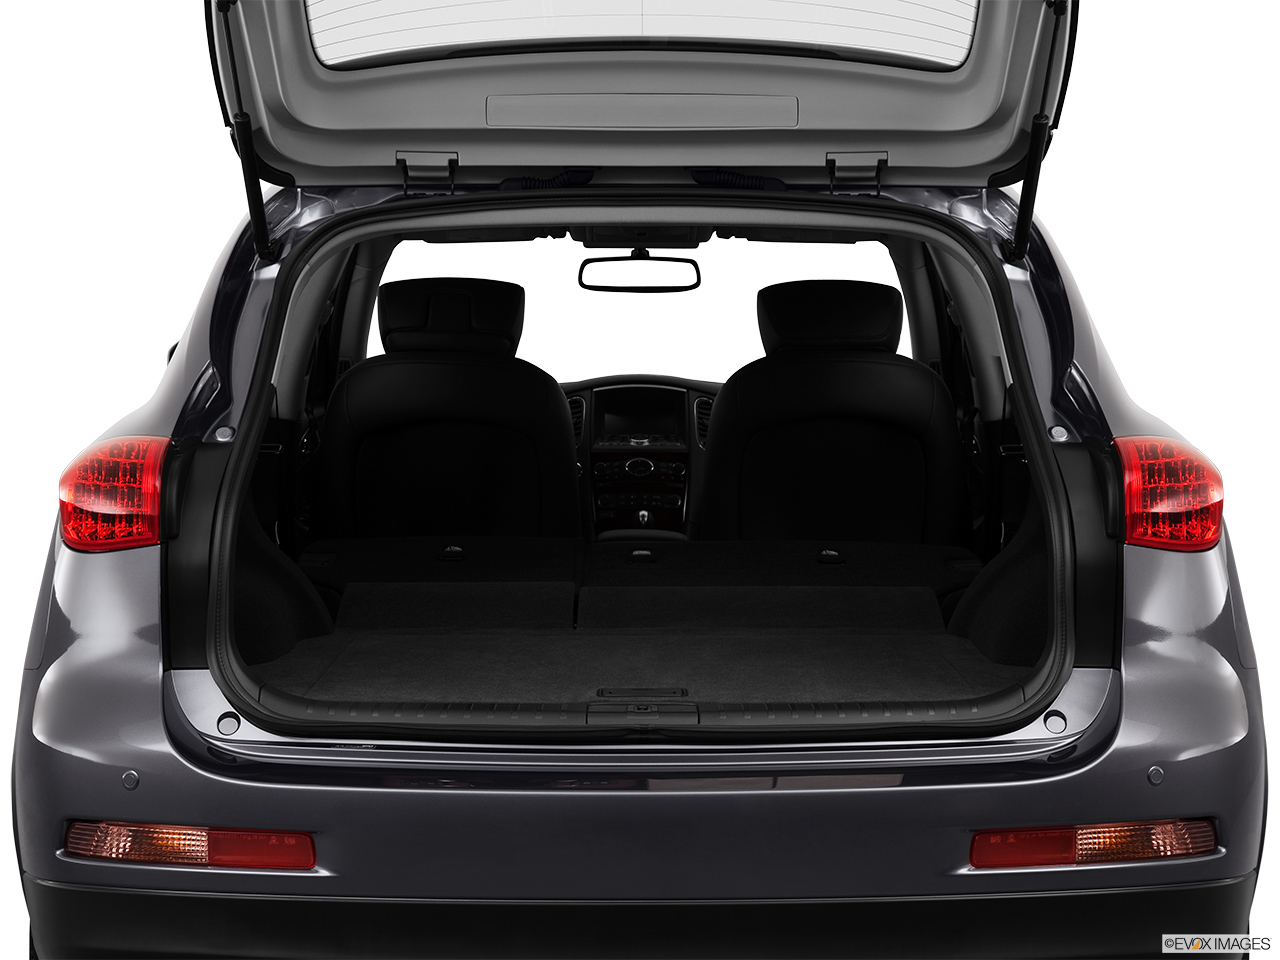 2013 Infiniti EX EX37 Journey AWD Hatchback & SUV rear angle. 